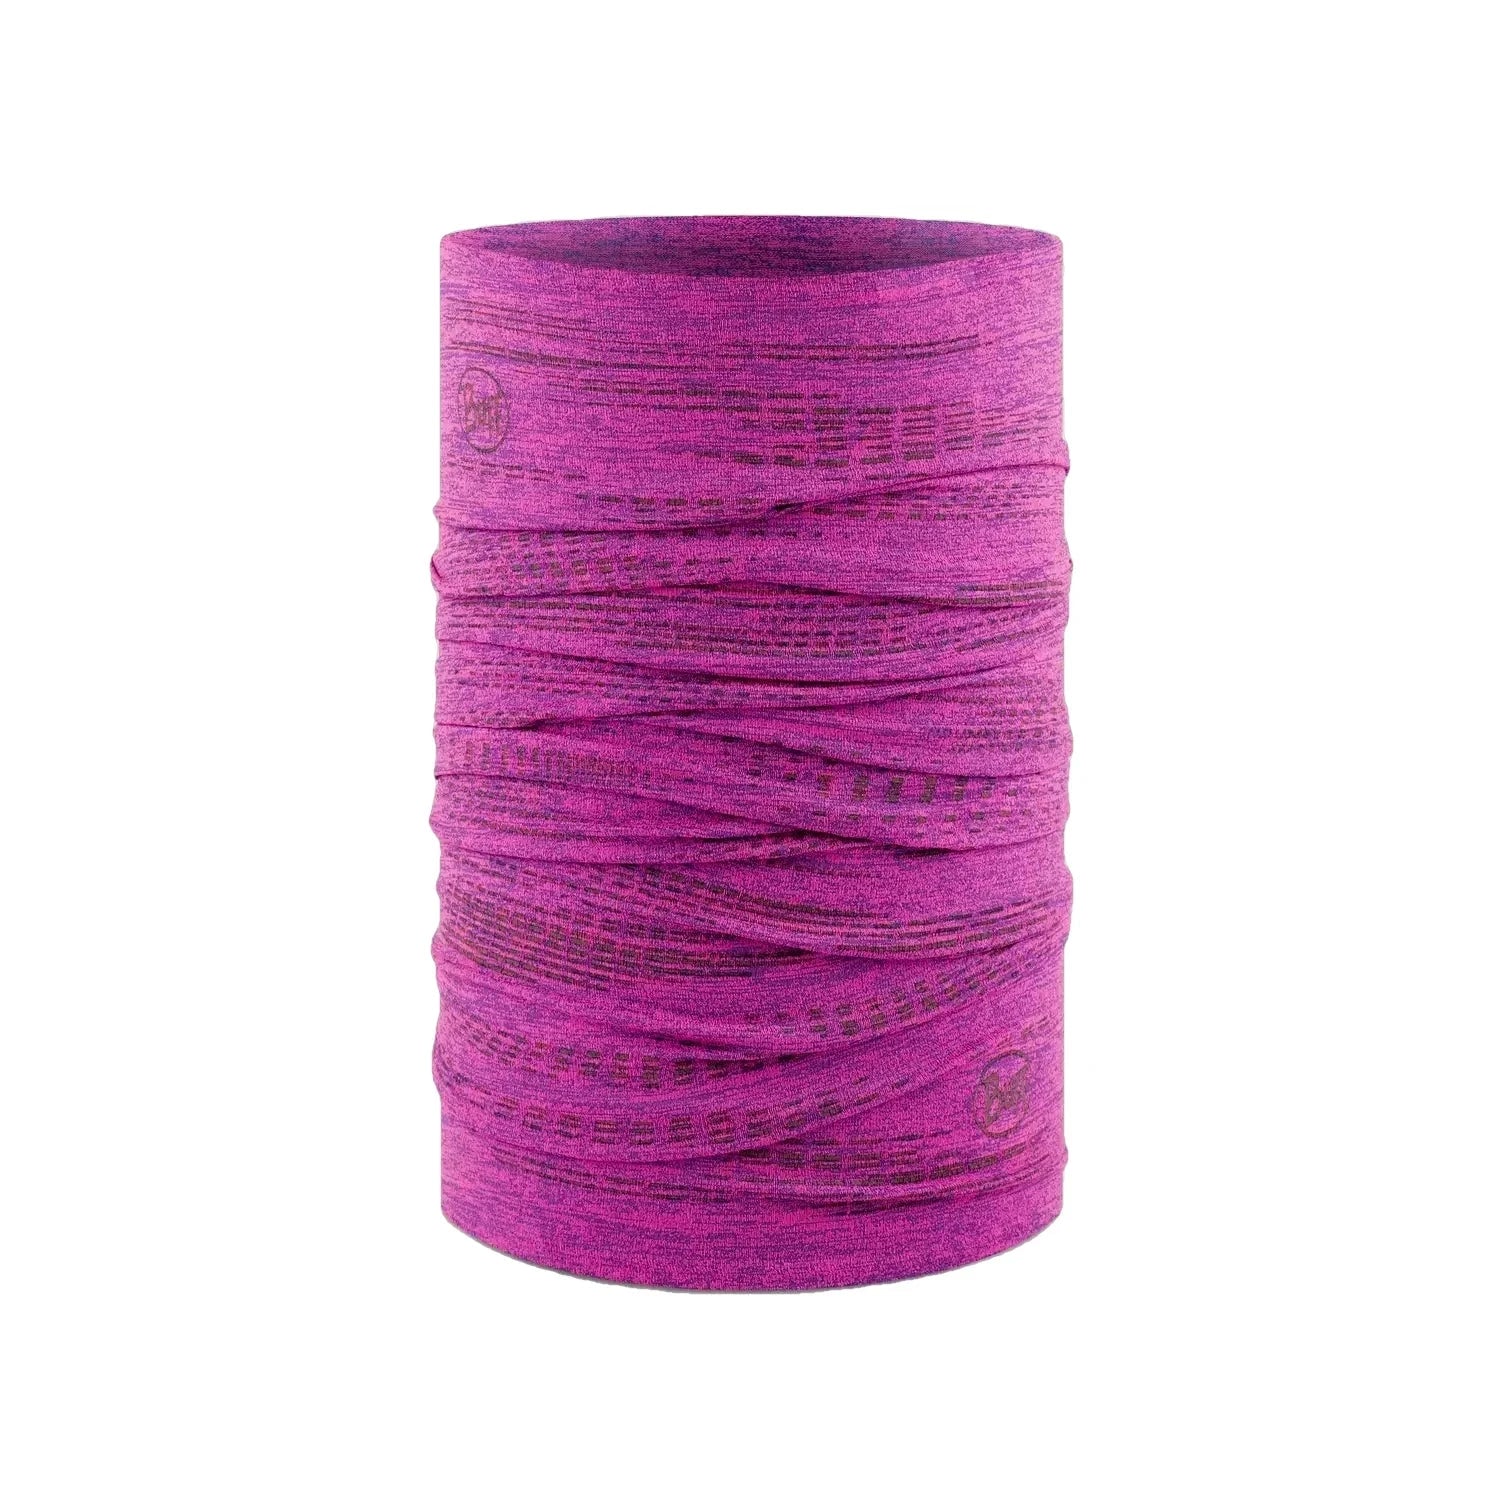 Buff DryFlx® Reflective Neckwear in Pink Fluor color.